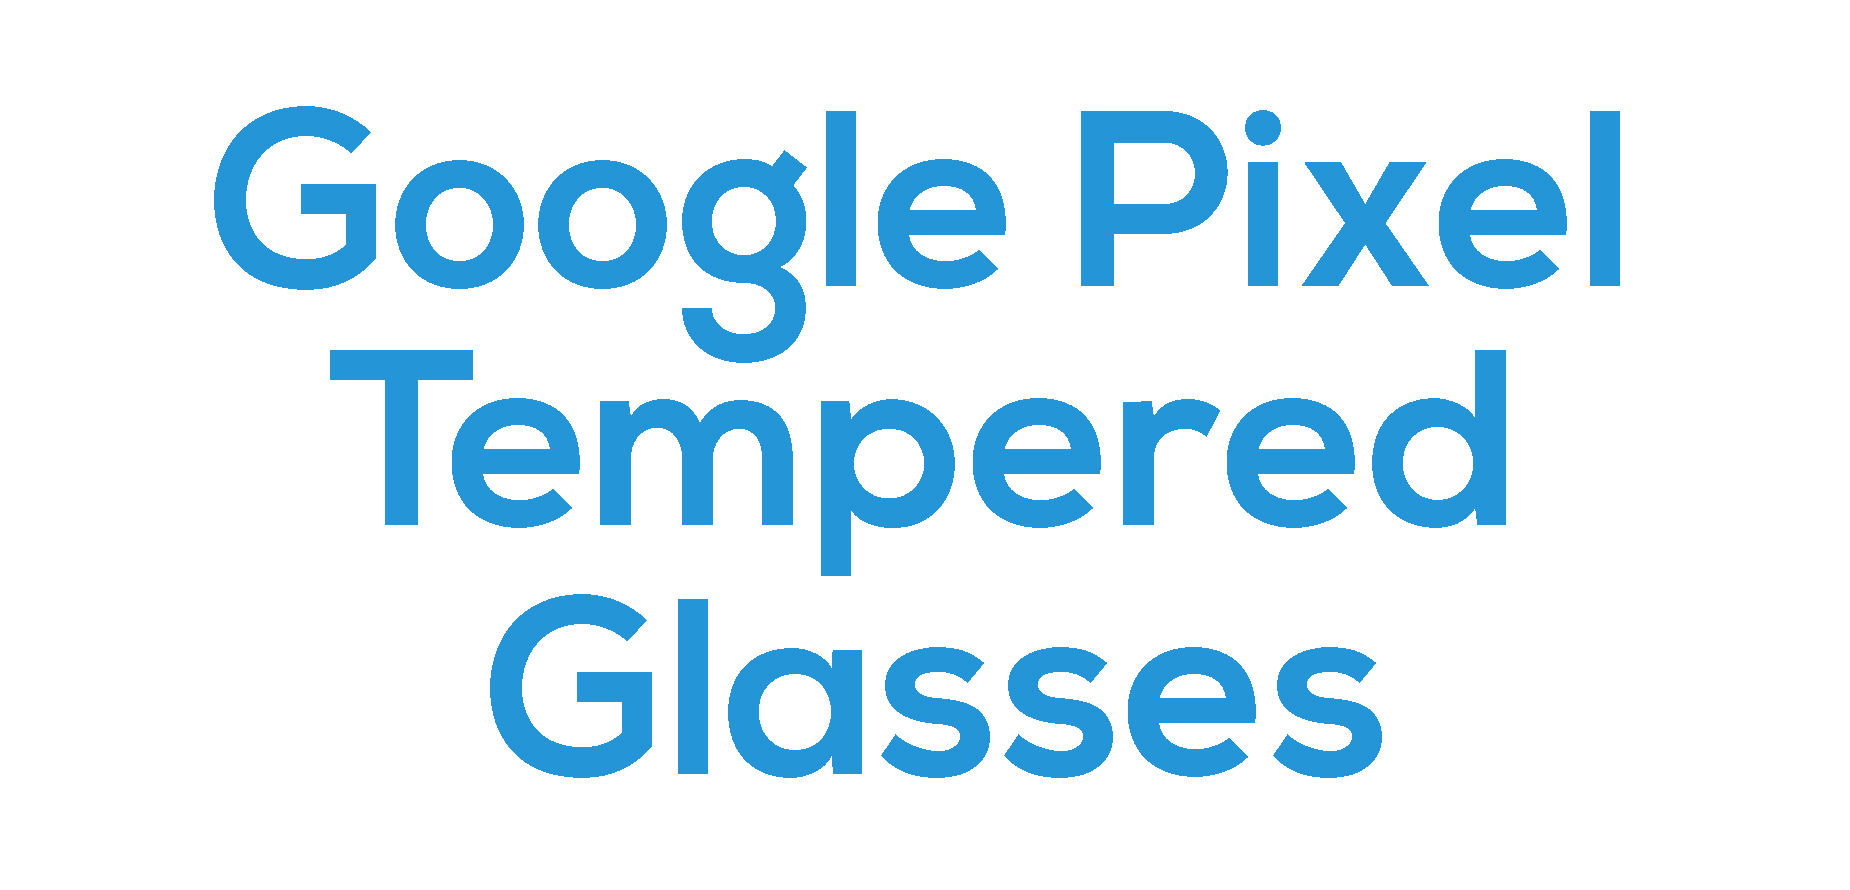 Google Pixel Tempered Glasses 